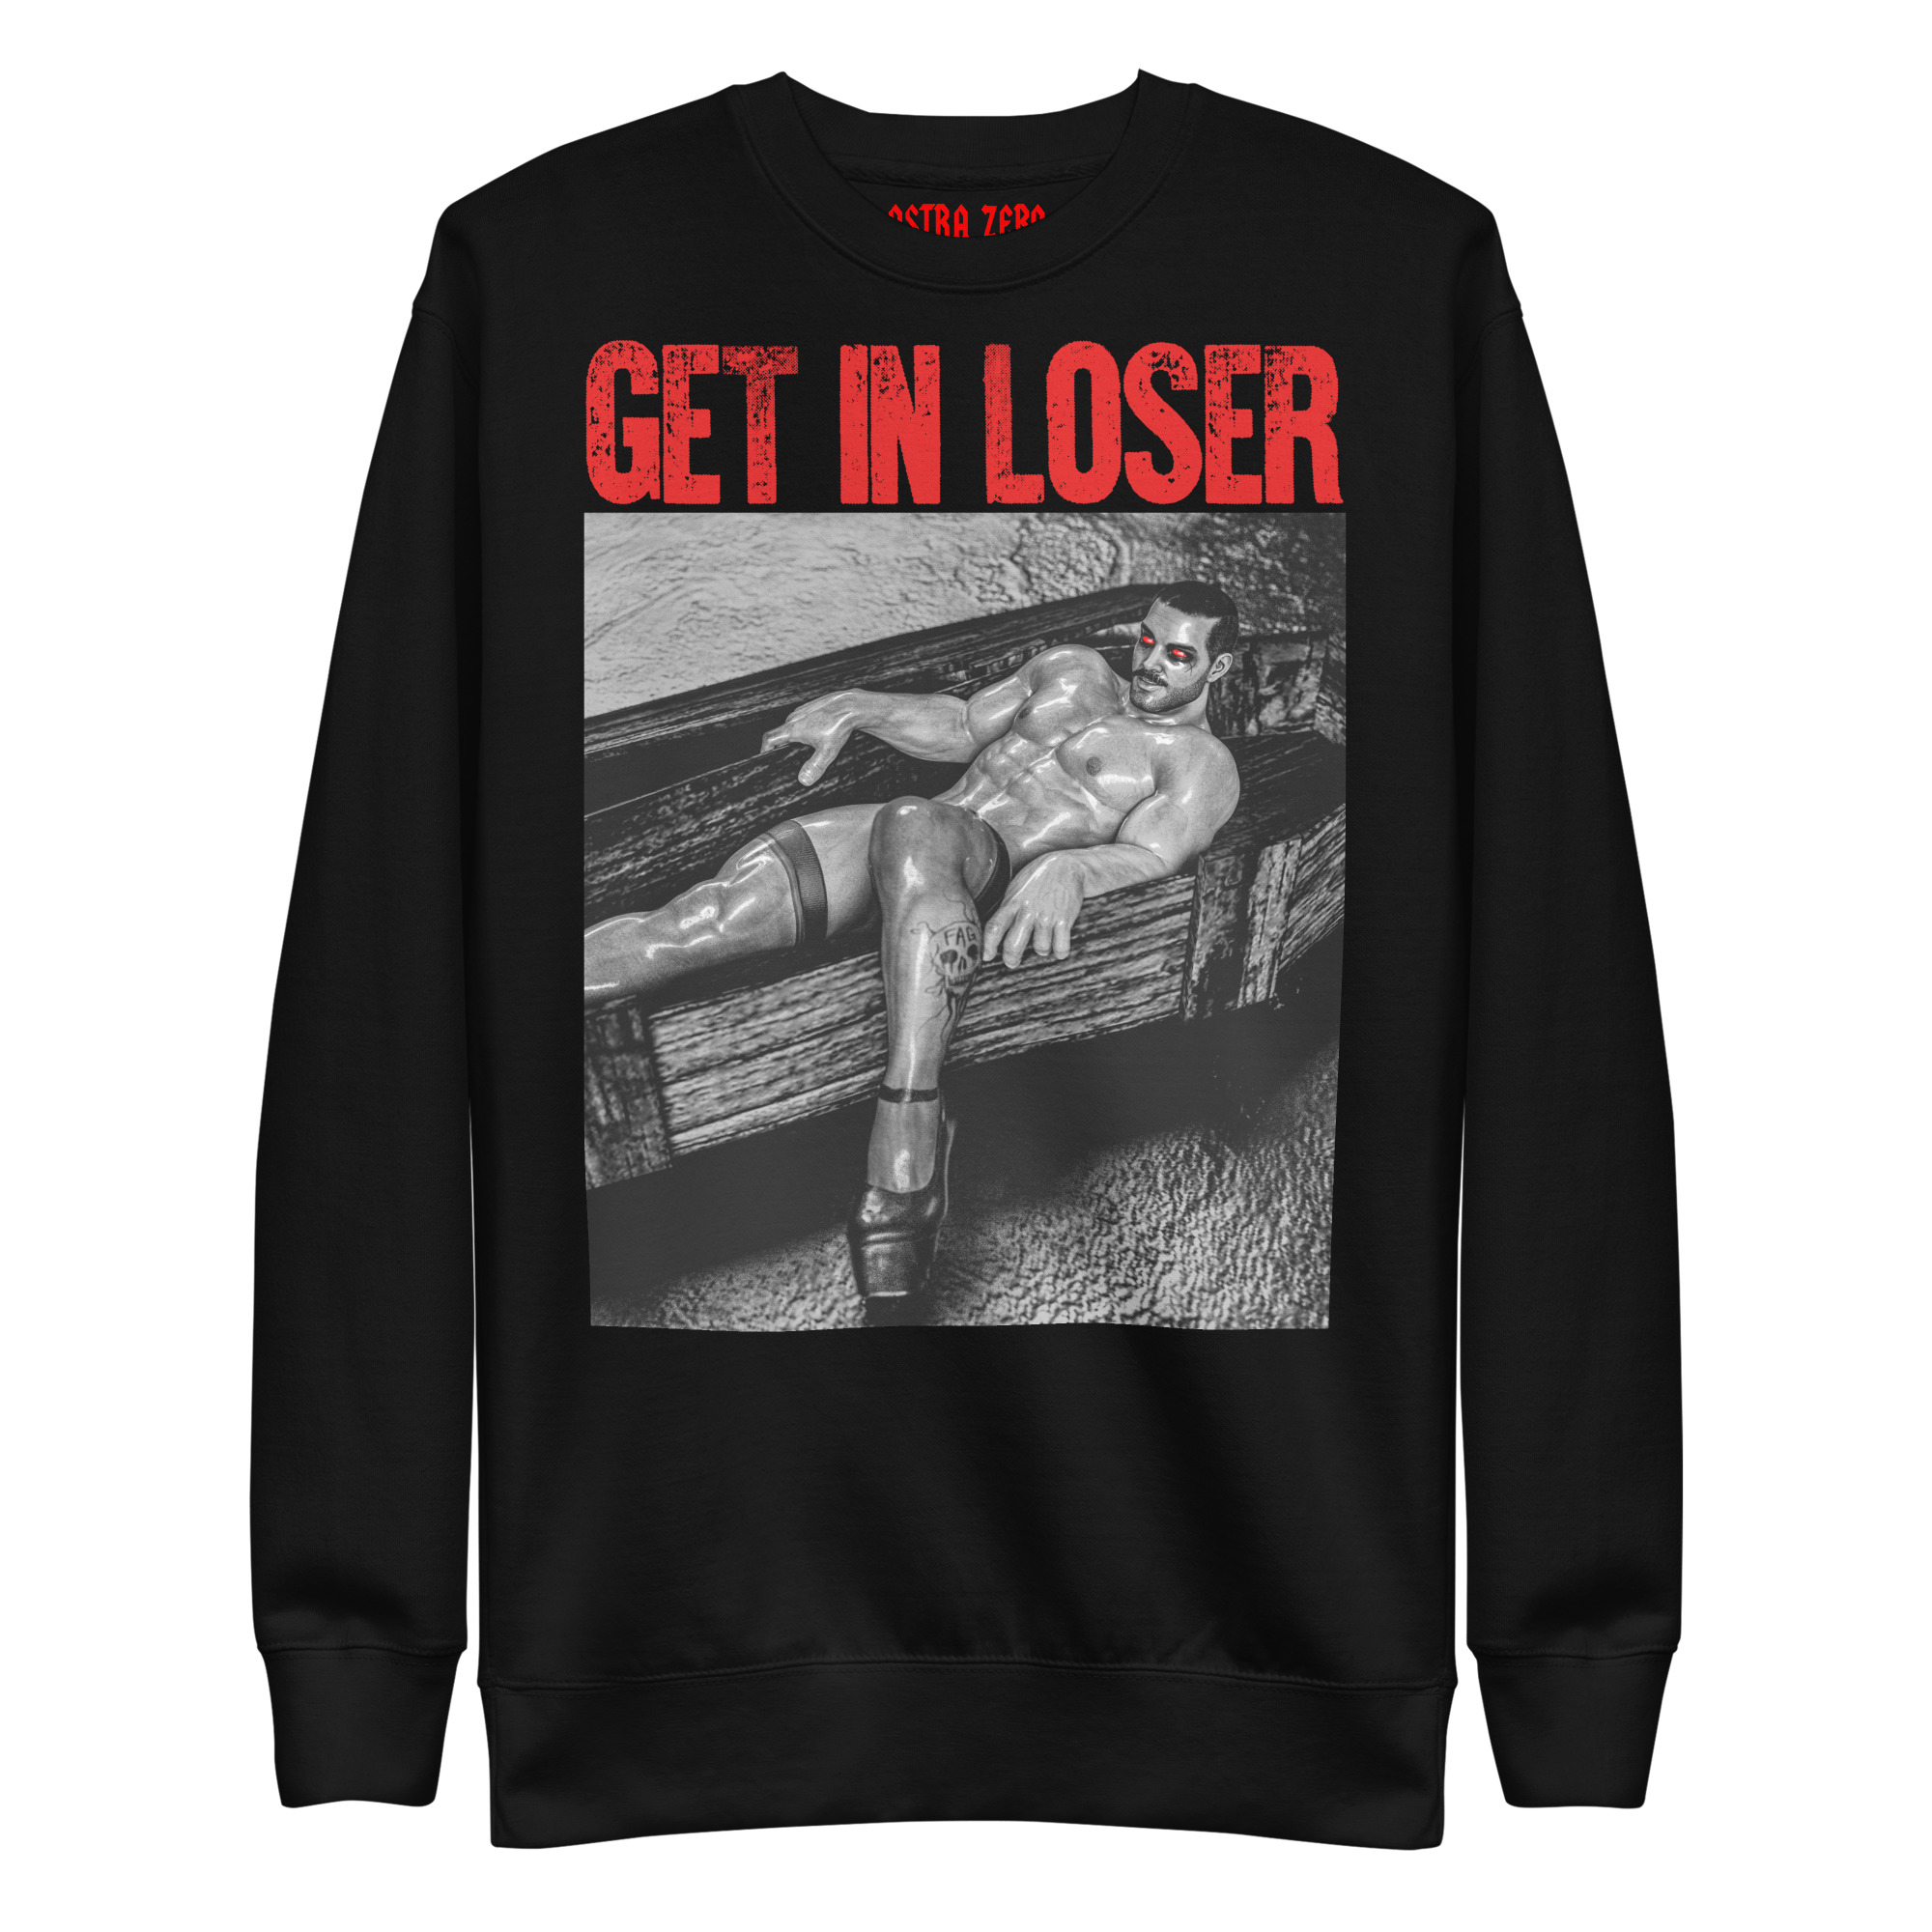 Featured image for “Get in Loser - BW - Unisex Premium Sweatshirt”